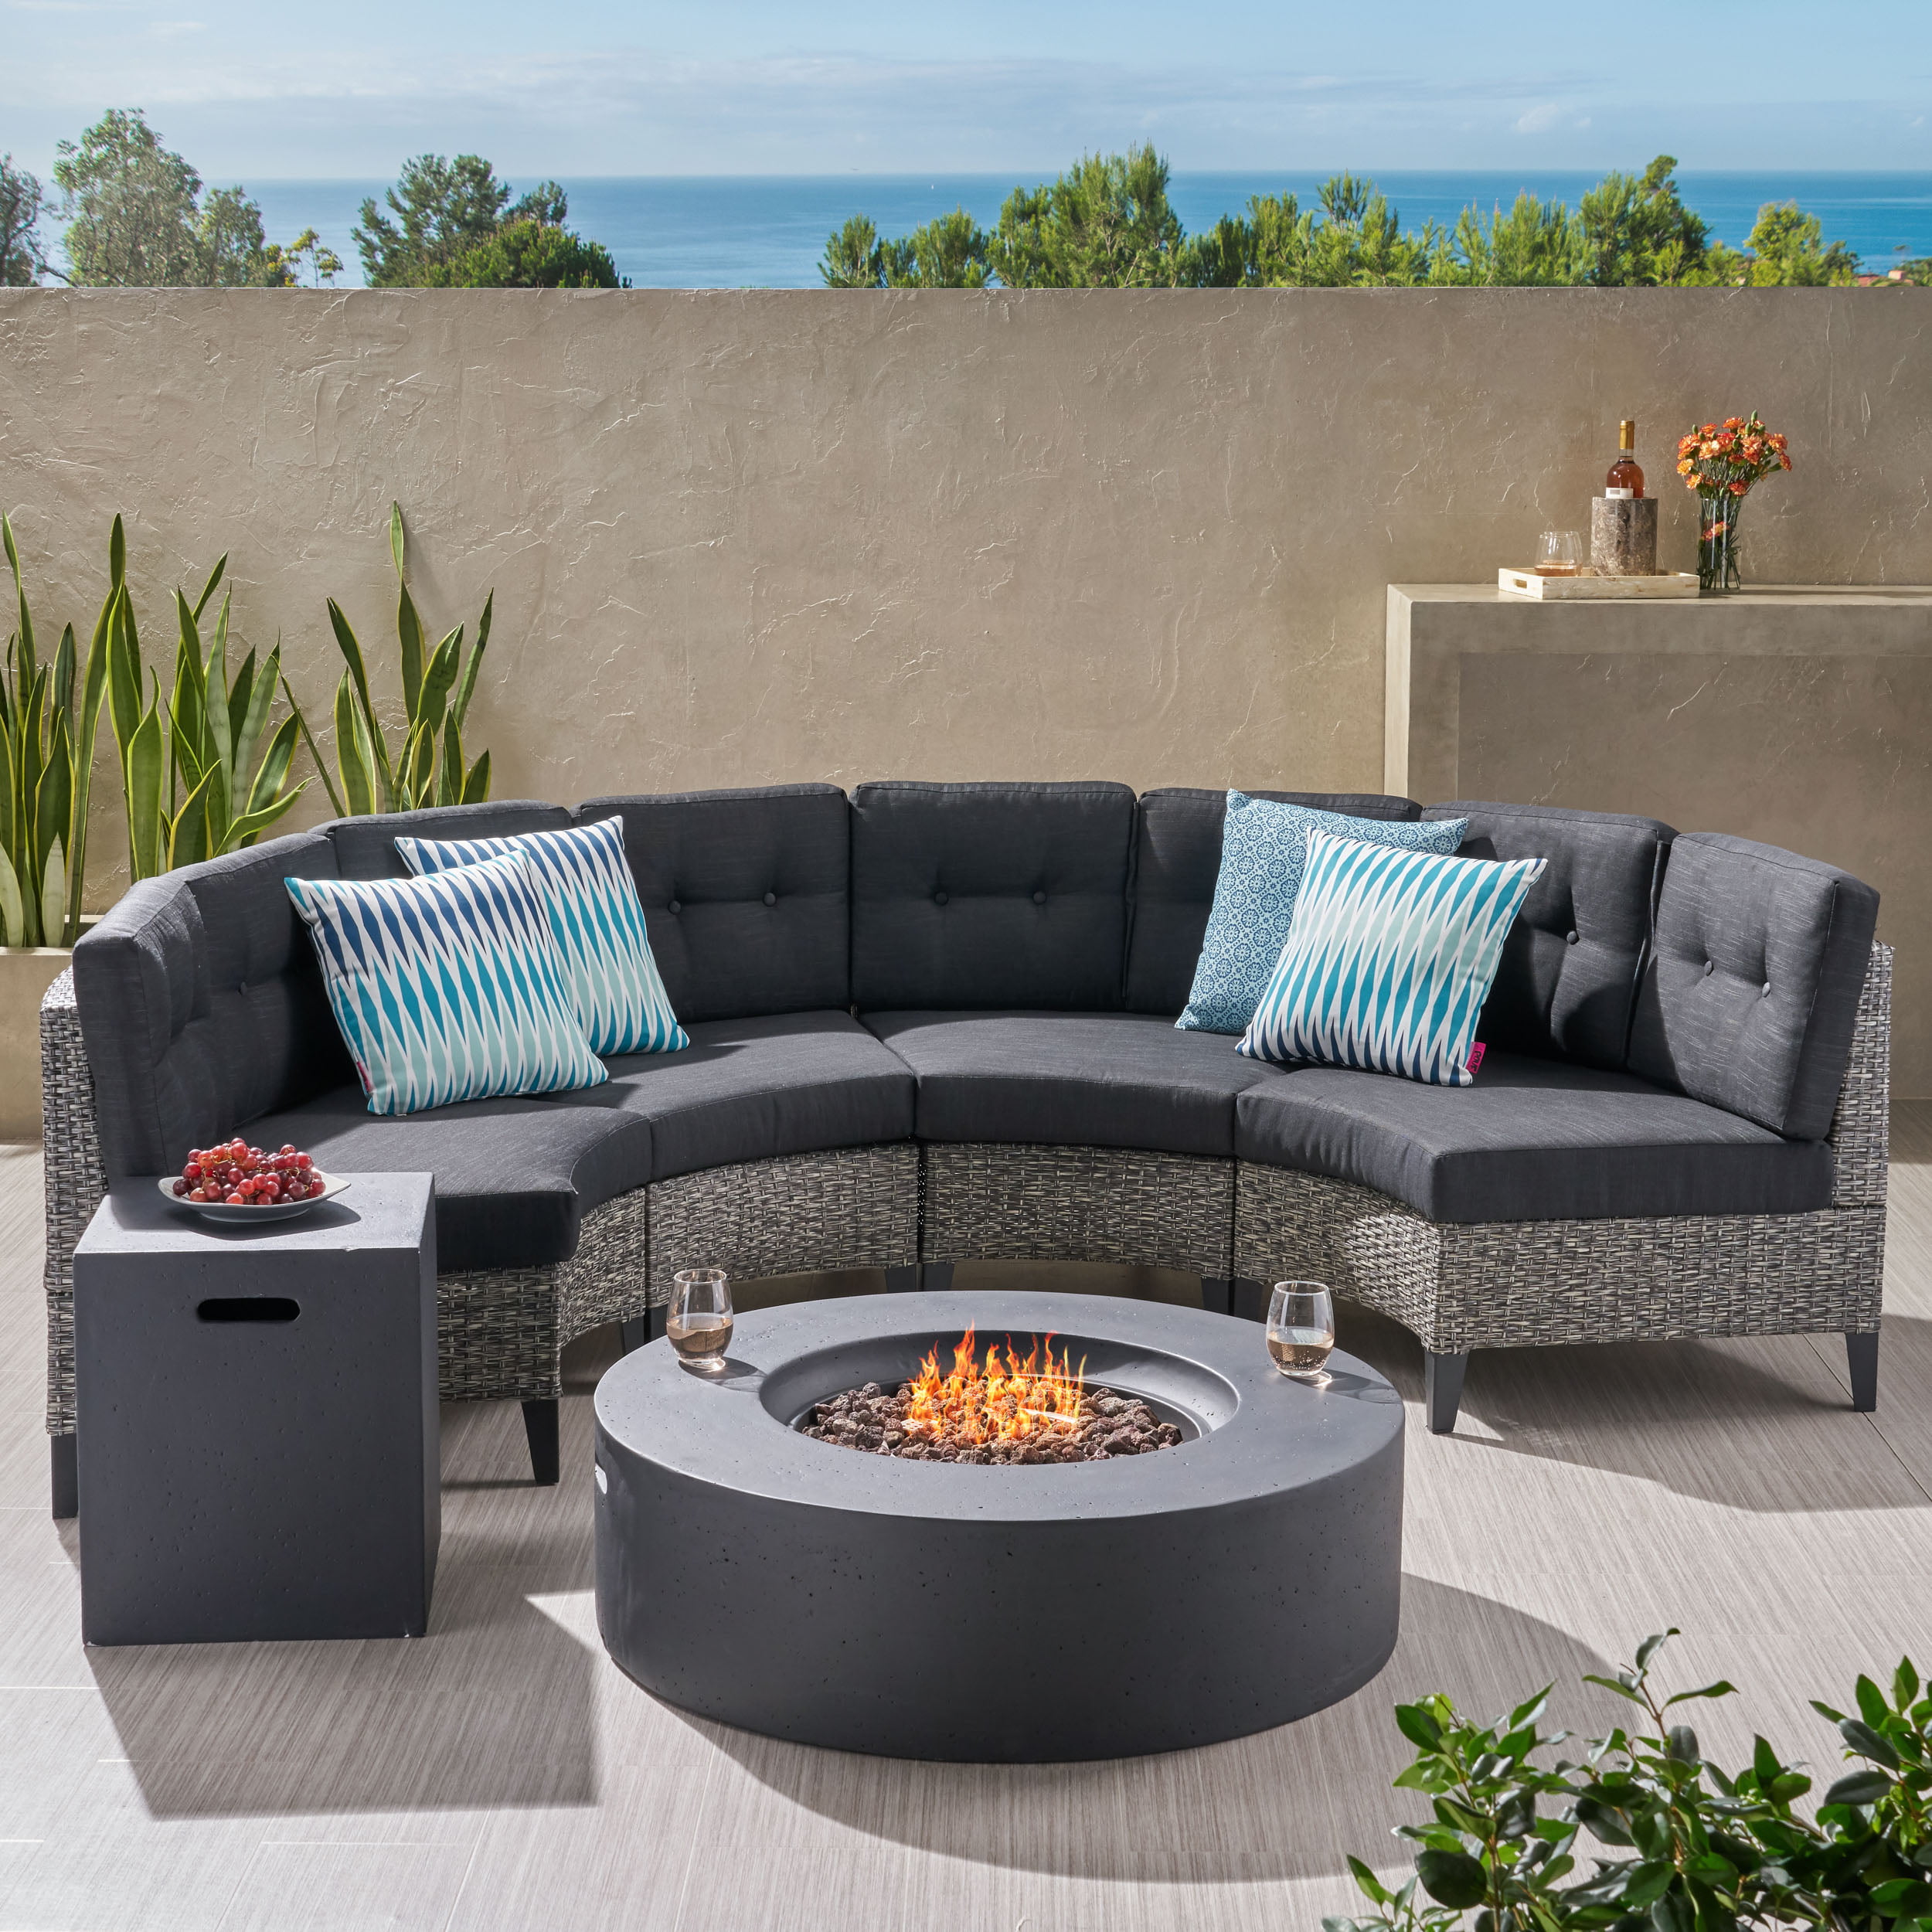 Nessett Outdoor 6 Piece Wicker Half, Outdoor Furniture Round Sectional Sofa